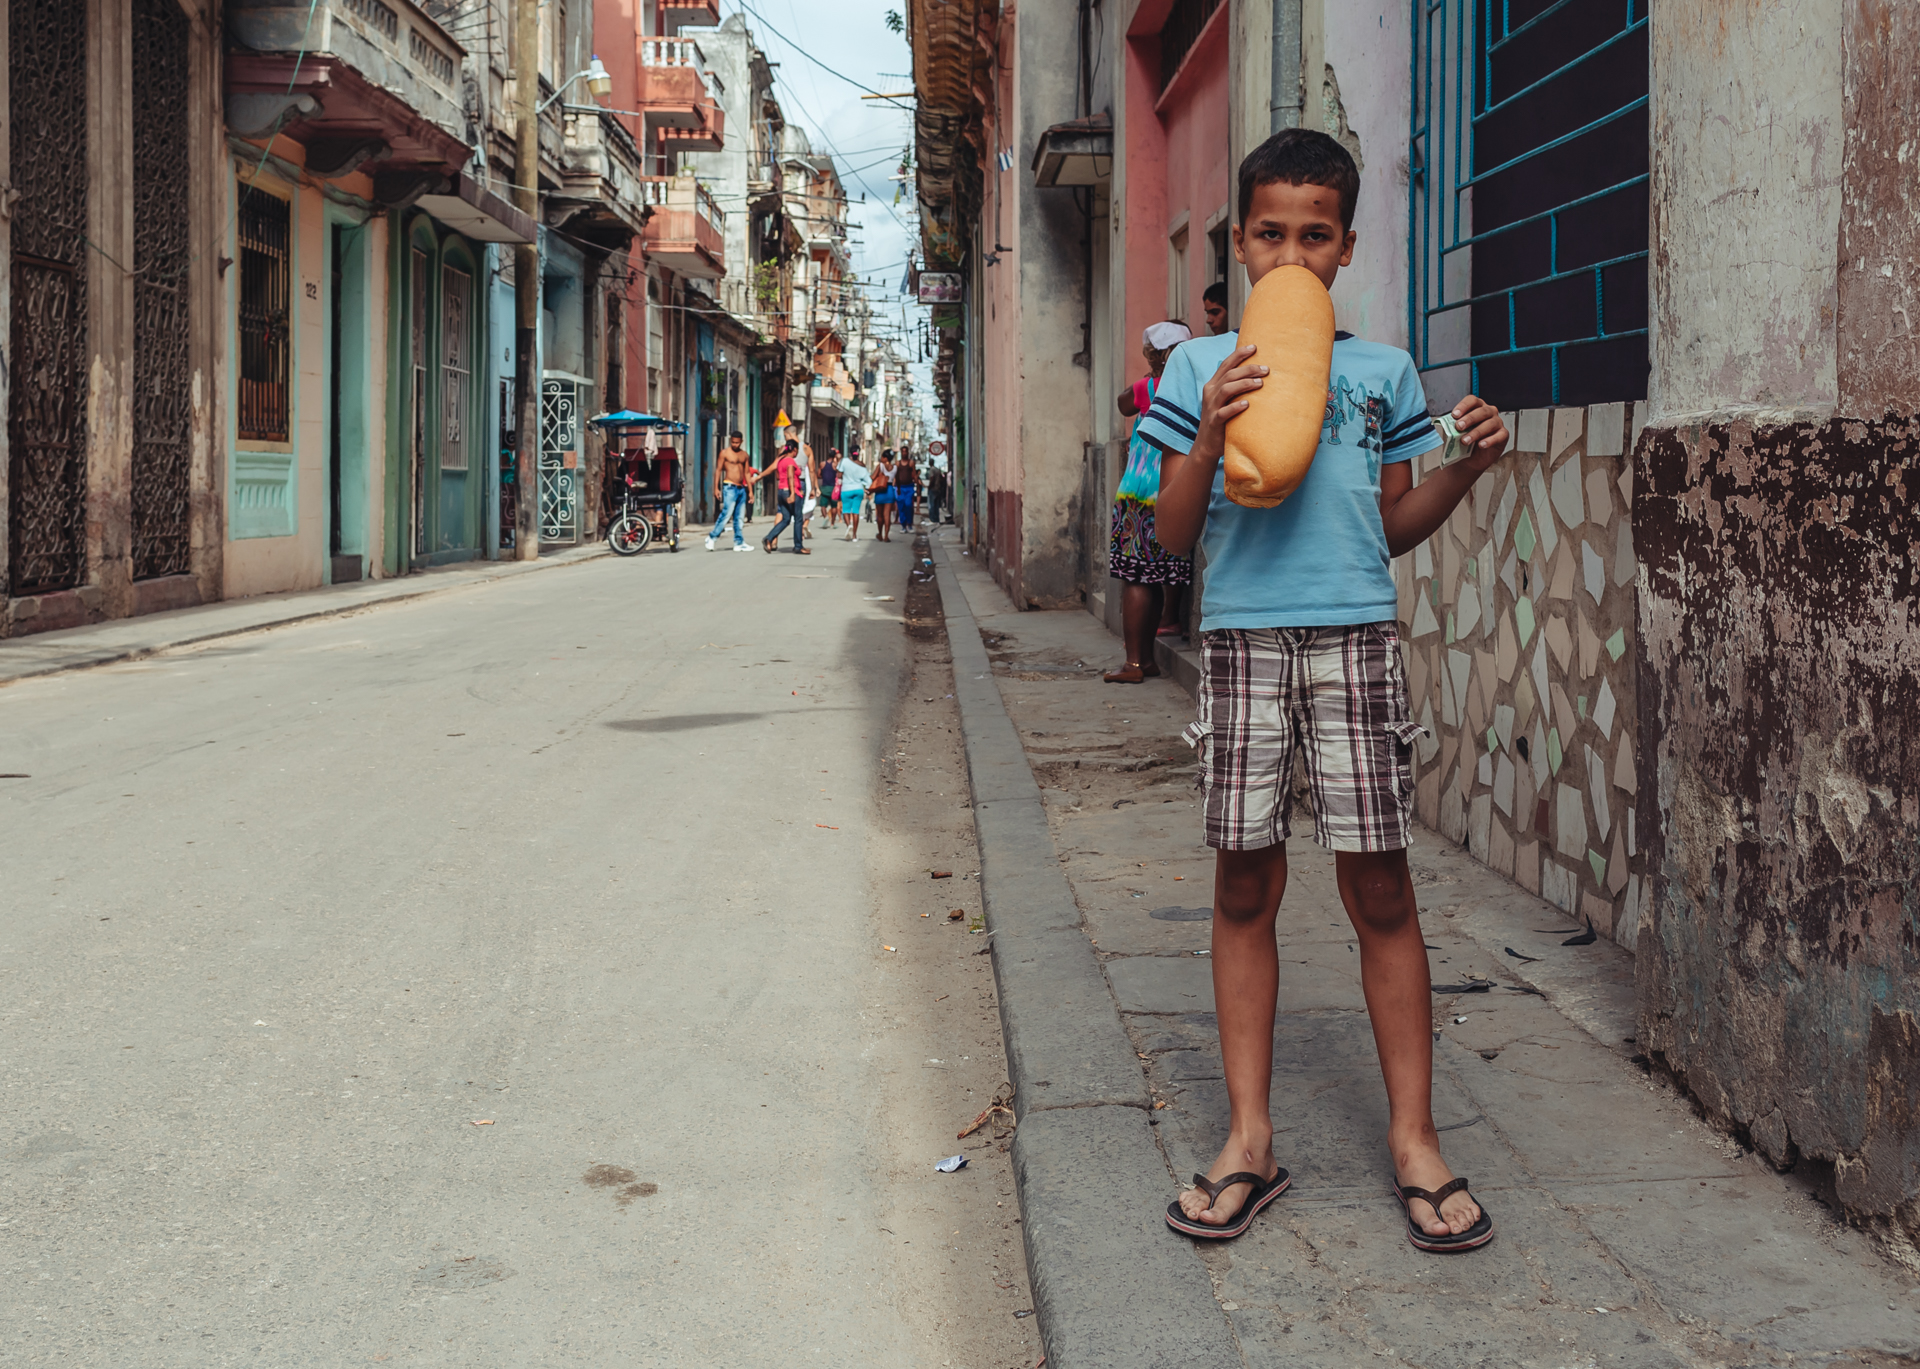 Genuine life in Cuba